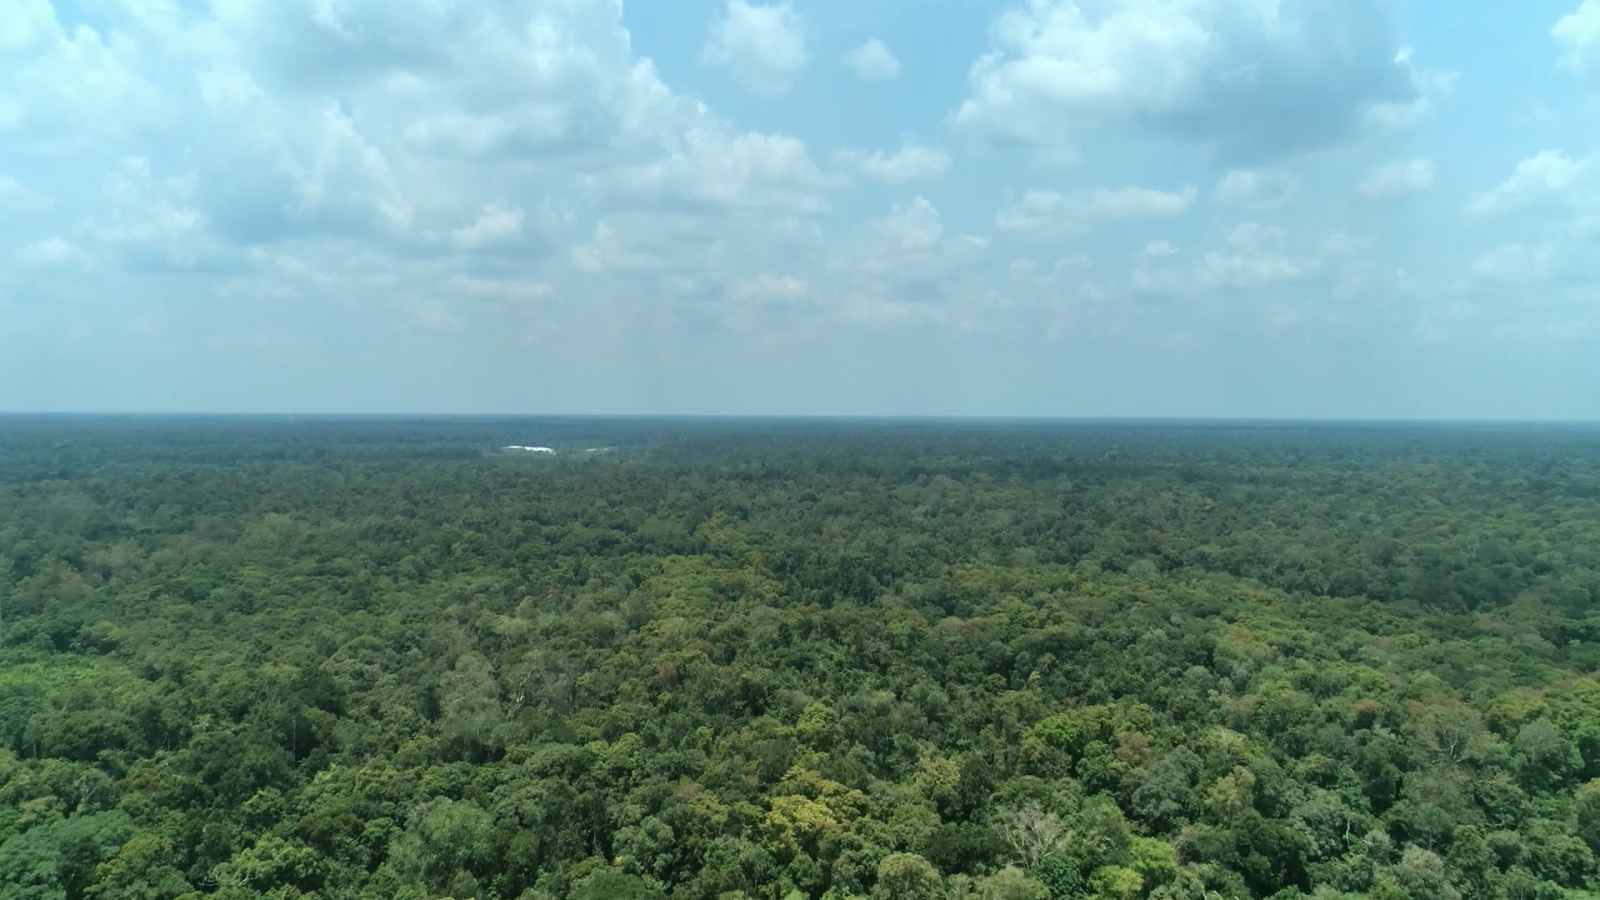 Trapa Speaks About Palm Oil Deforestation through Photos